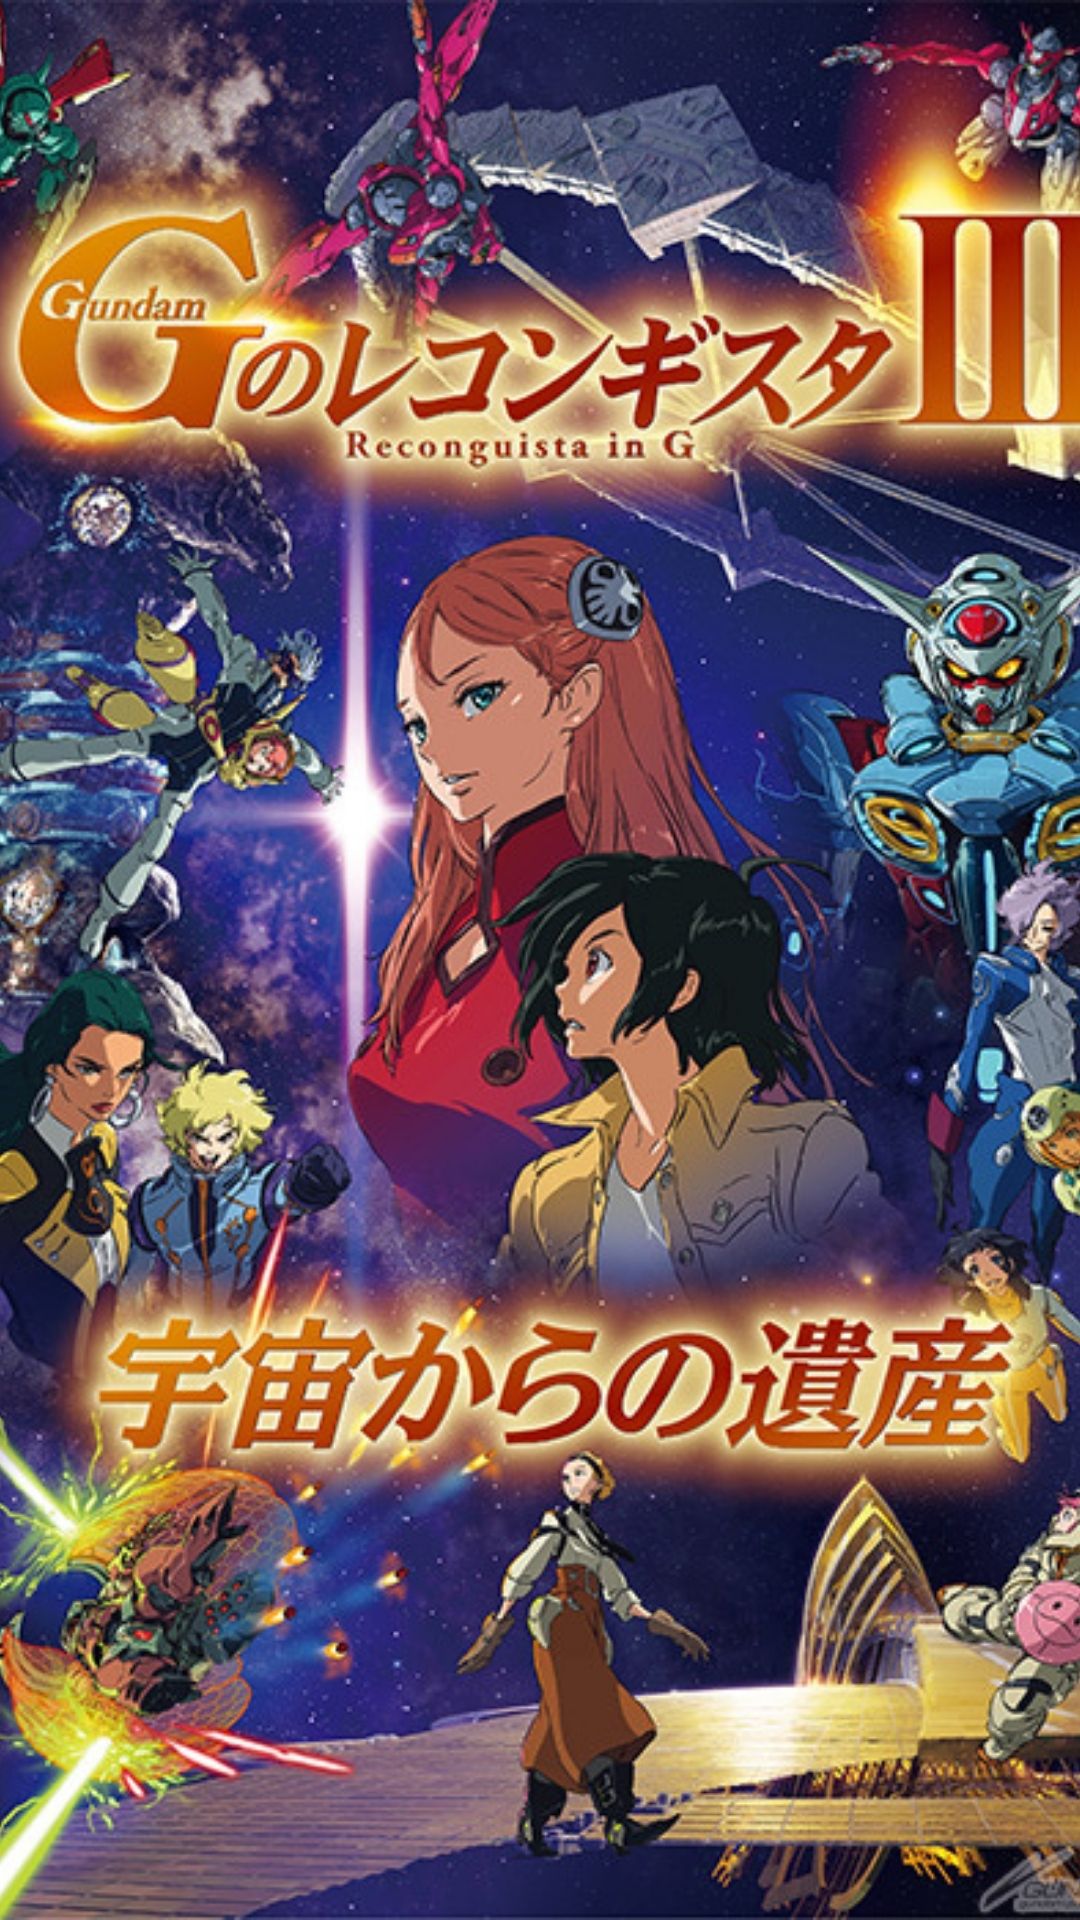 Gundam 0080 War In The Pocket Ova Receives Manga In June